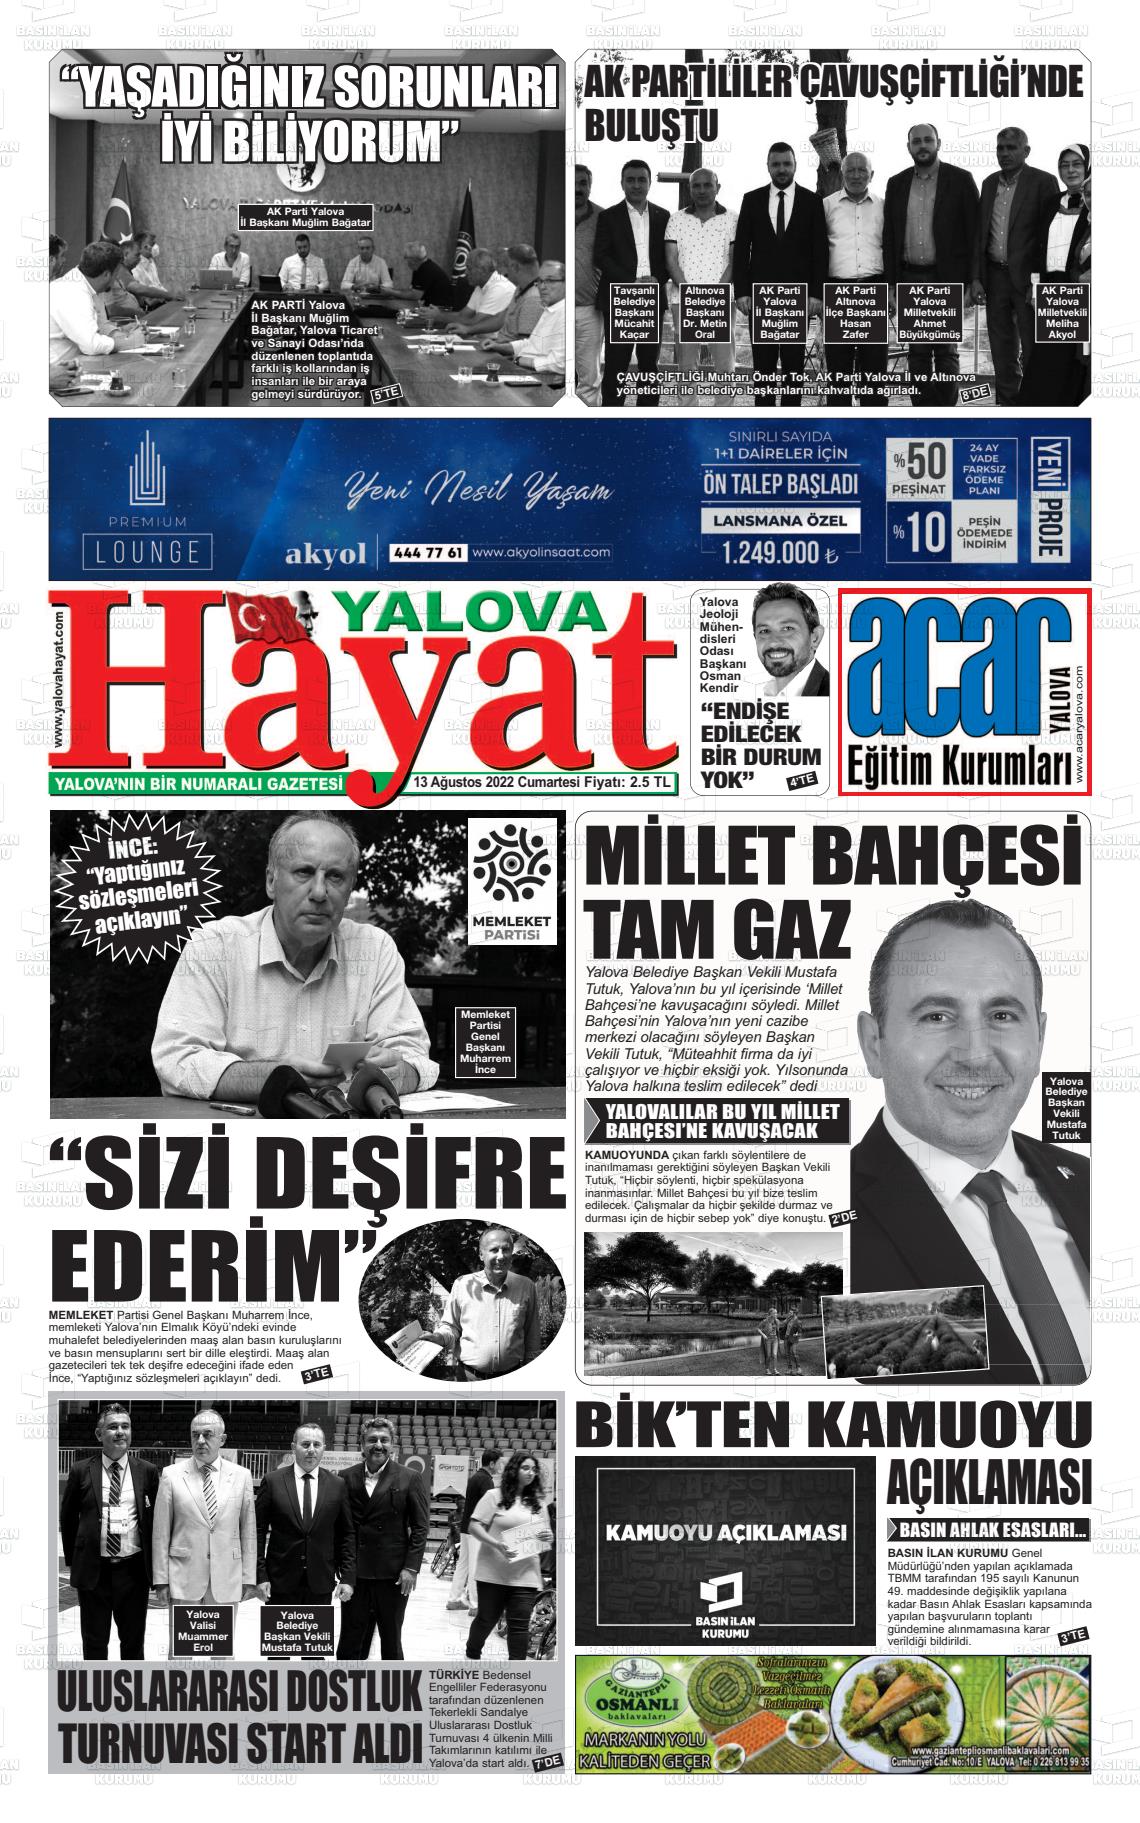 13 Ağustos 2022 Yalova Hayat Gazete Manşeti